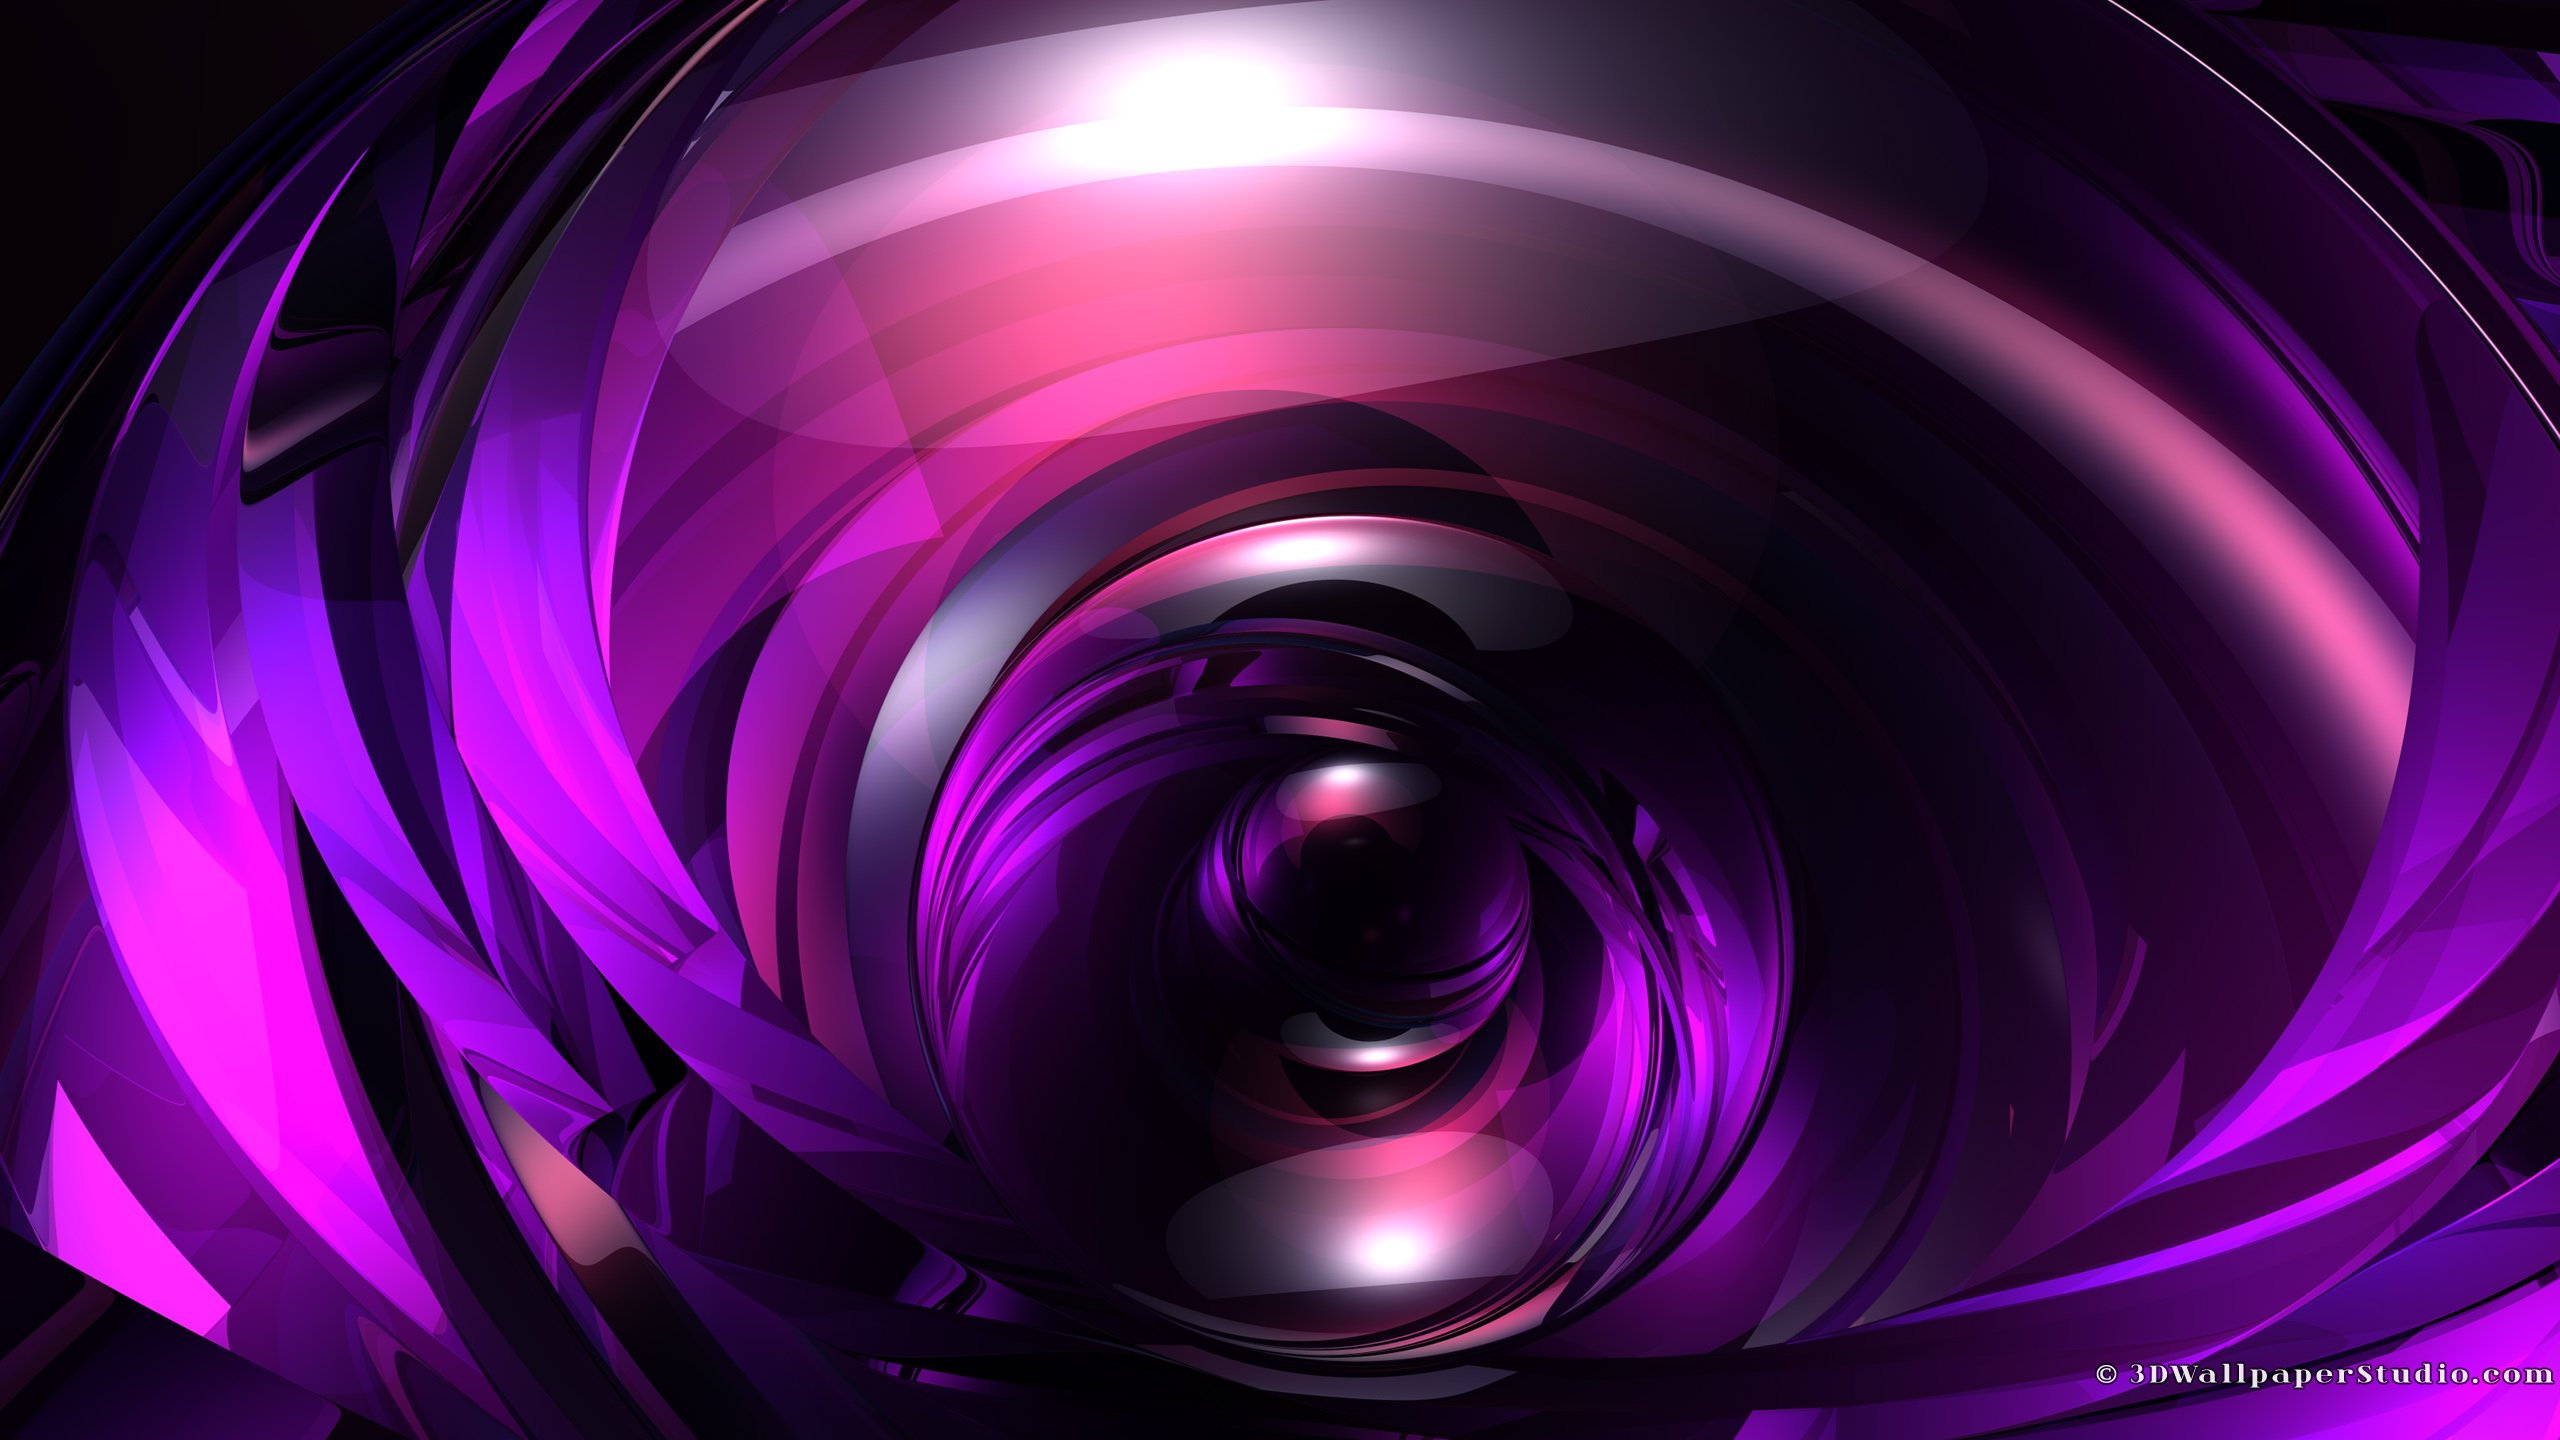 Glossy purple abstract 2560x jpg 286553 2560x1440